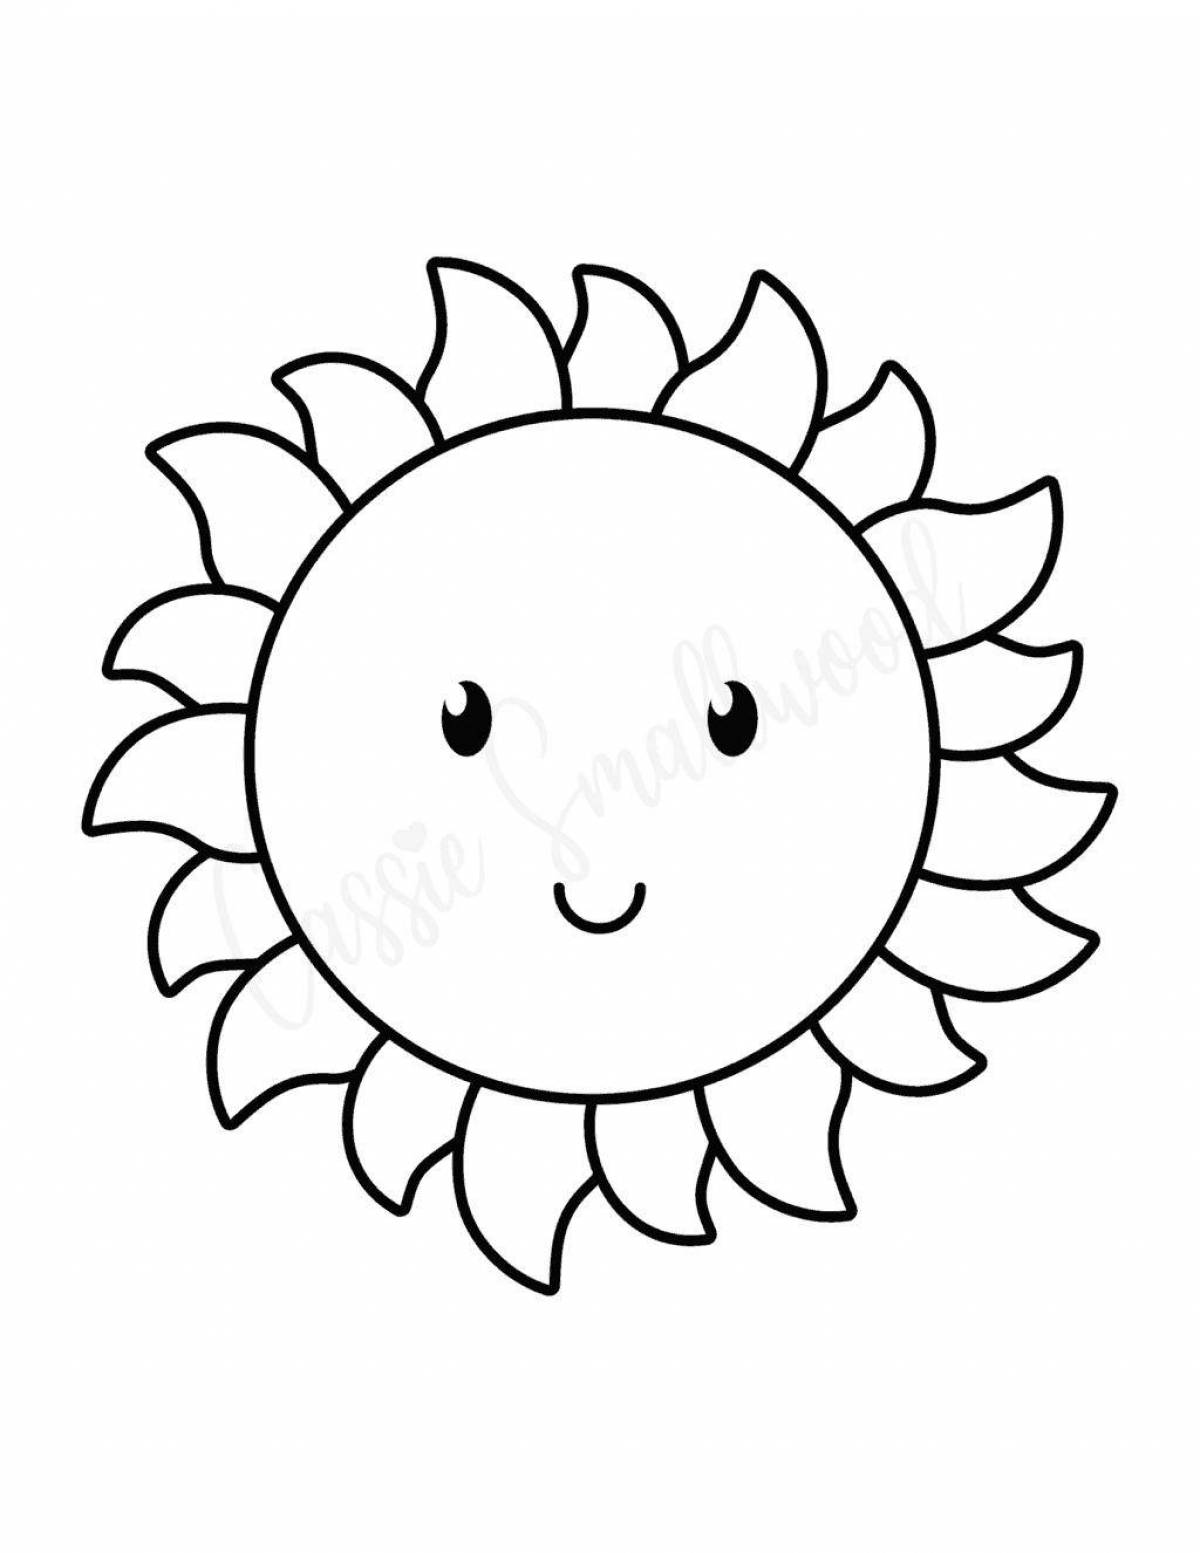 Цветущая раскраска солнце для детей 3-4 лет